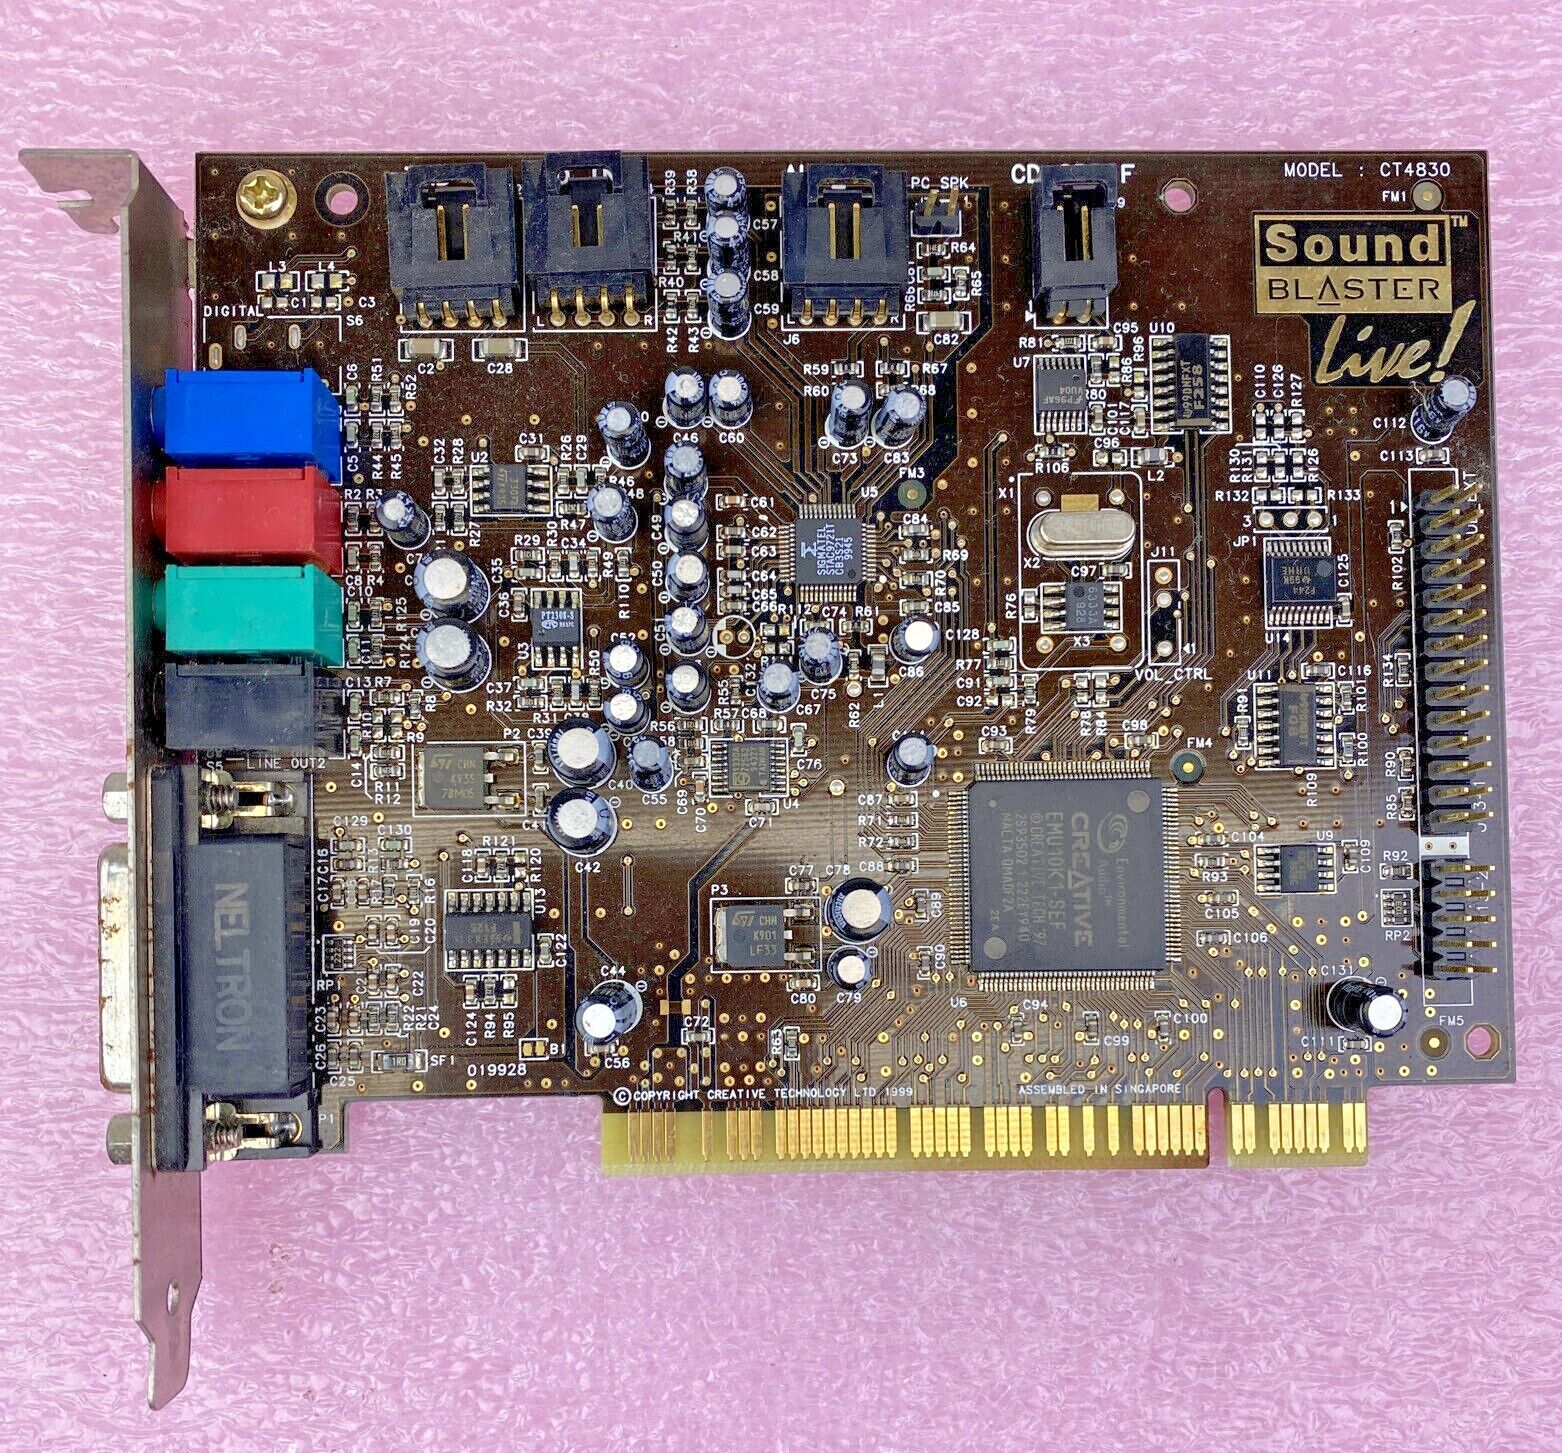 Creative Labs CT4830 SoundBlaster Live! PCI sound card with gameport